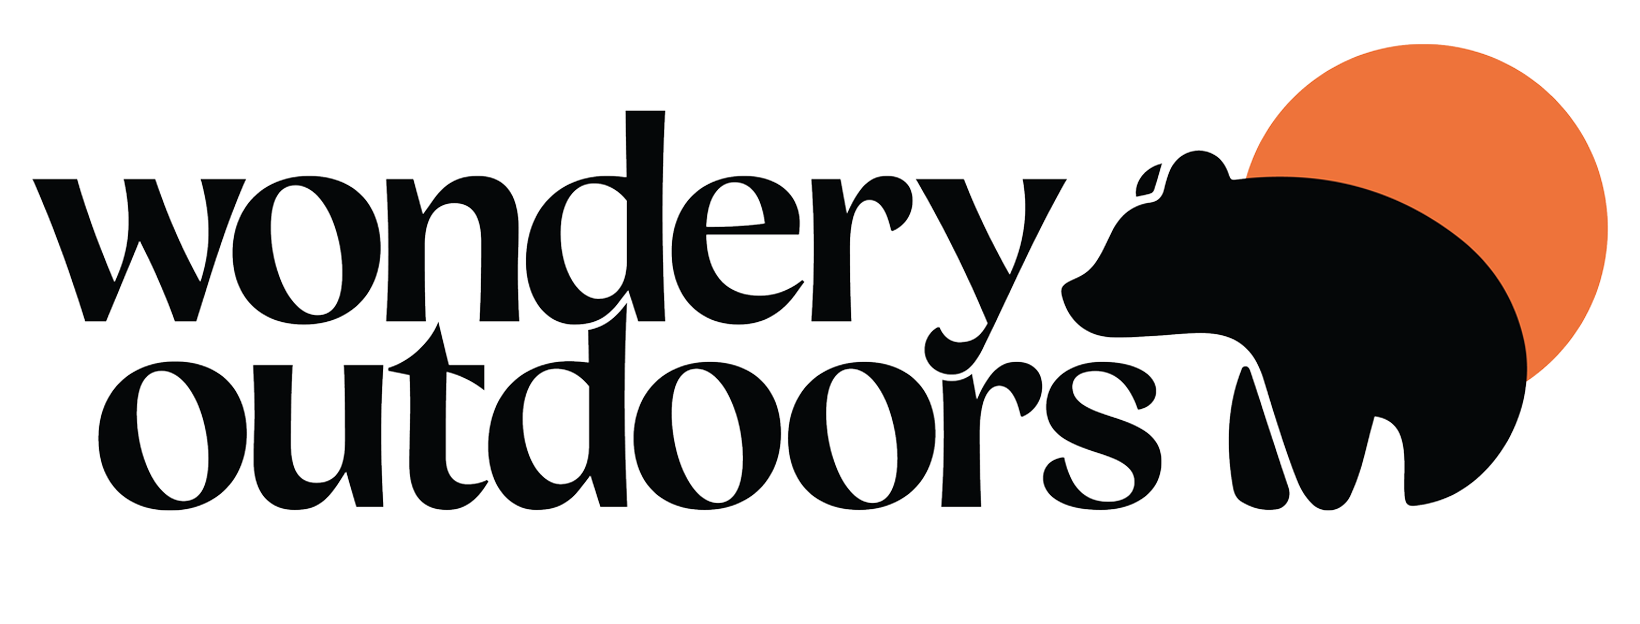 Wondery Outdoors (Copy) logo